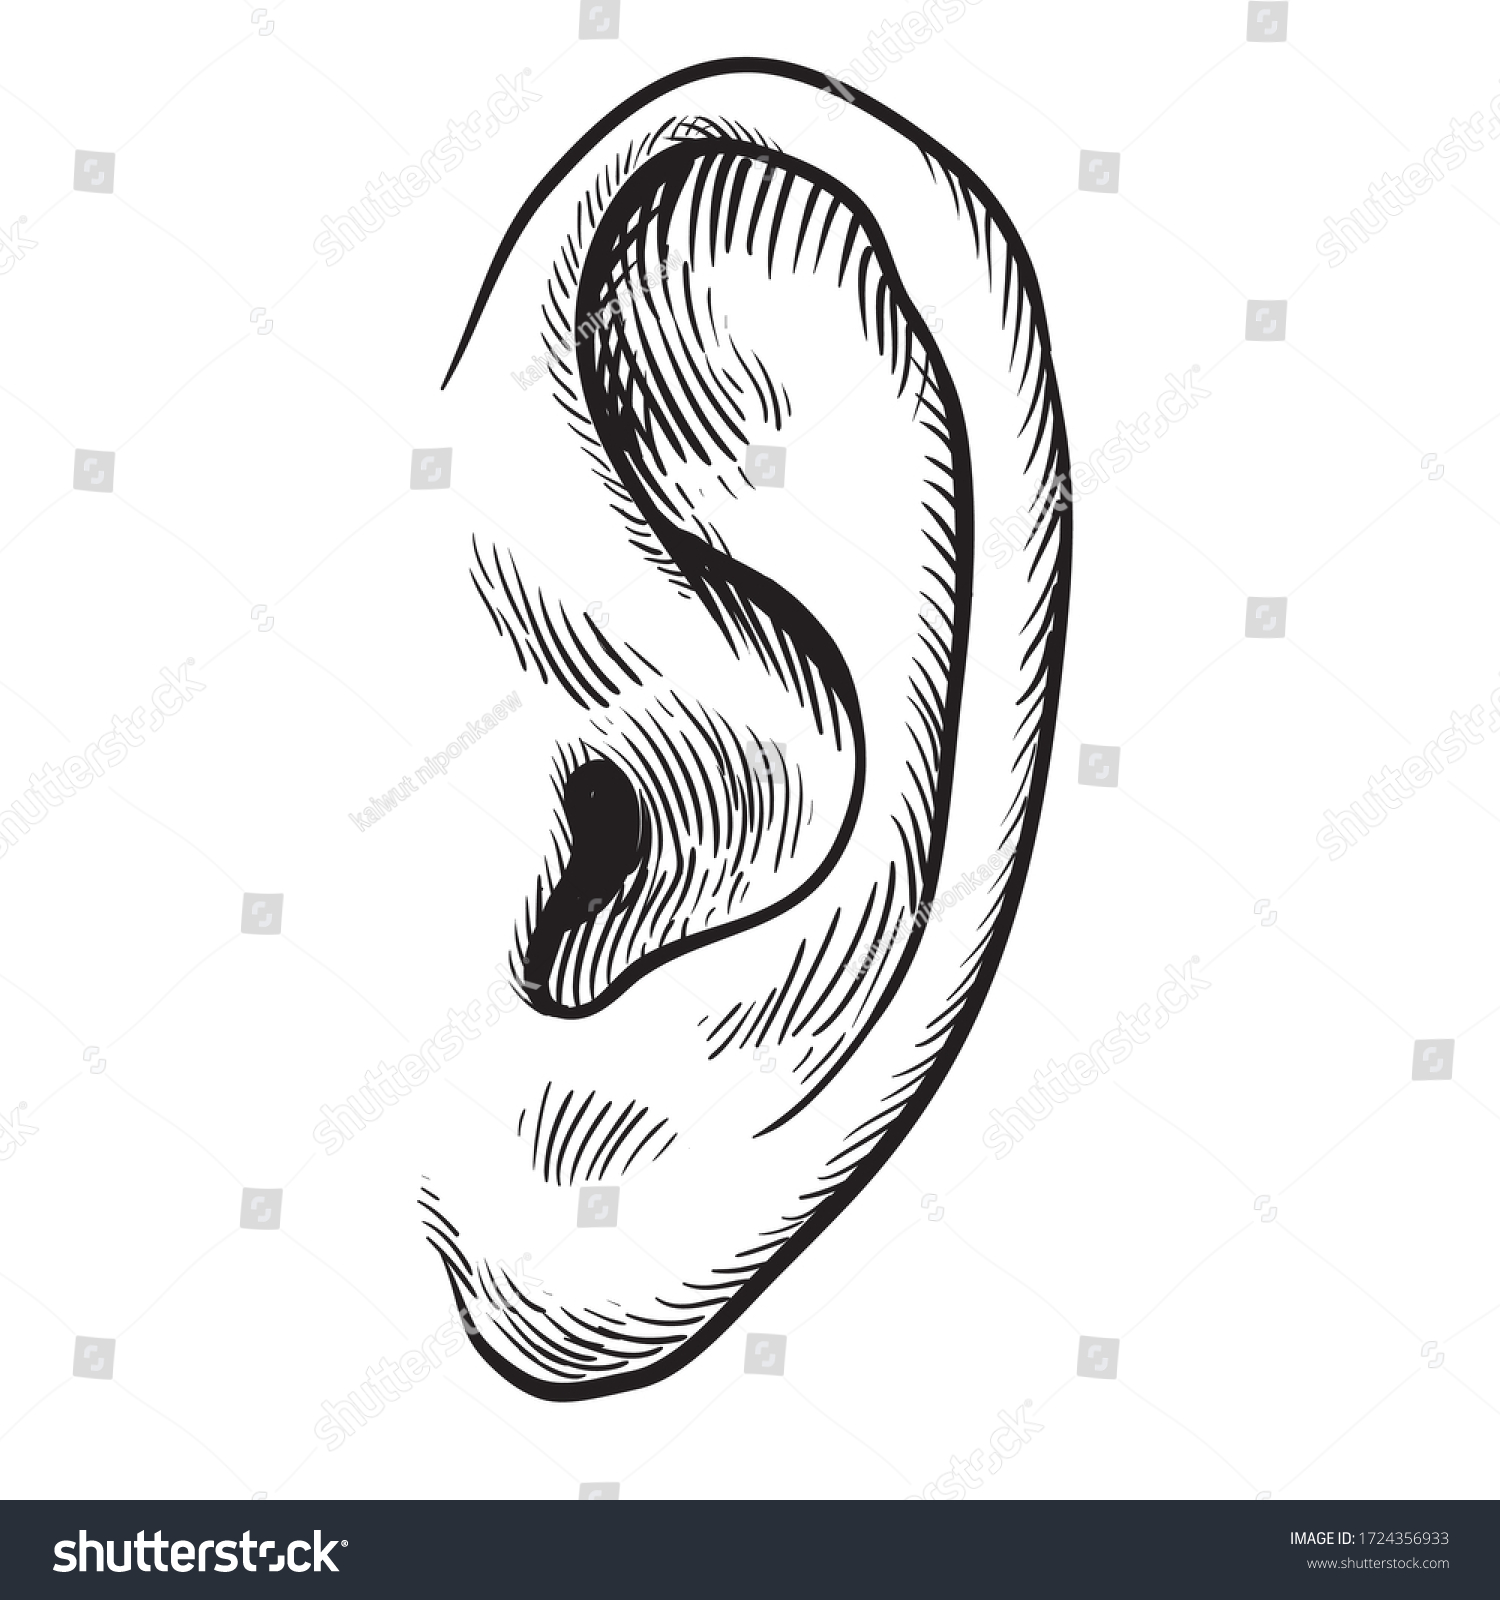 Human Ear Engraved Stylehand Drawn Visual Stock Vector Royalty Free